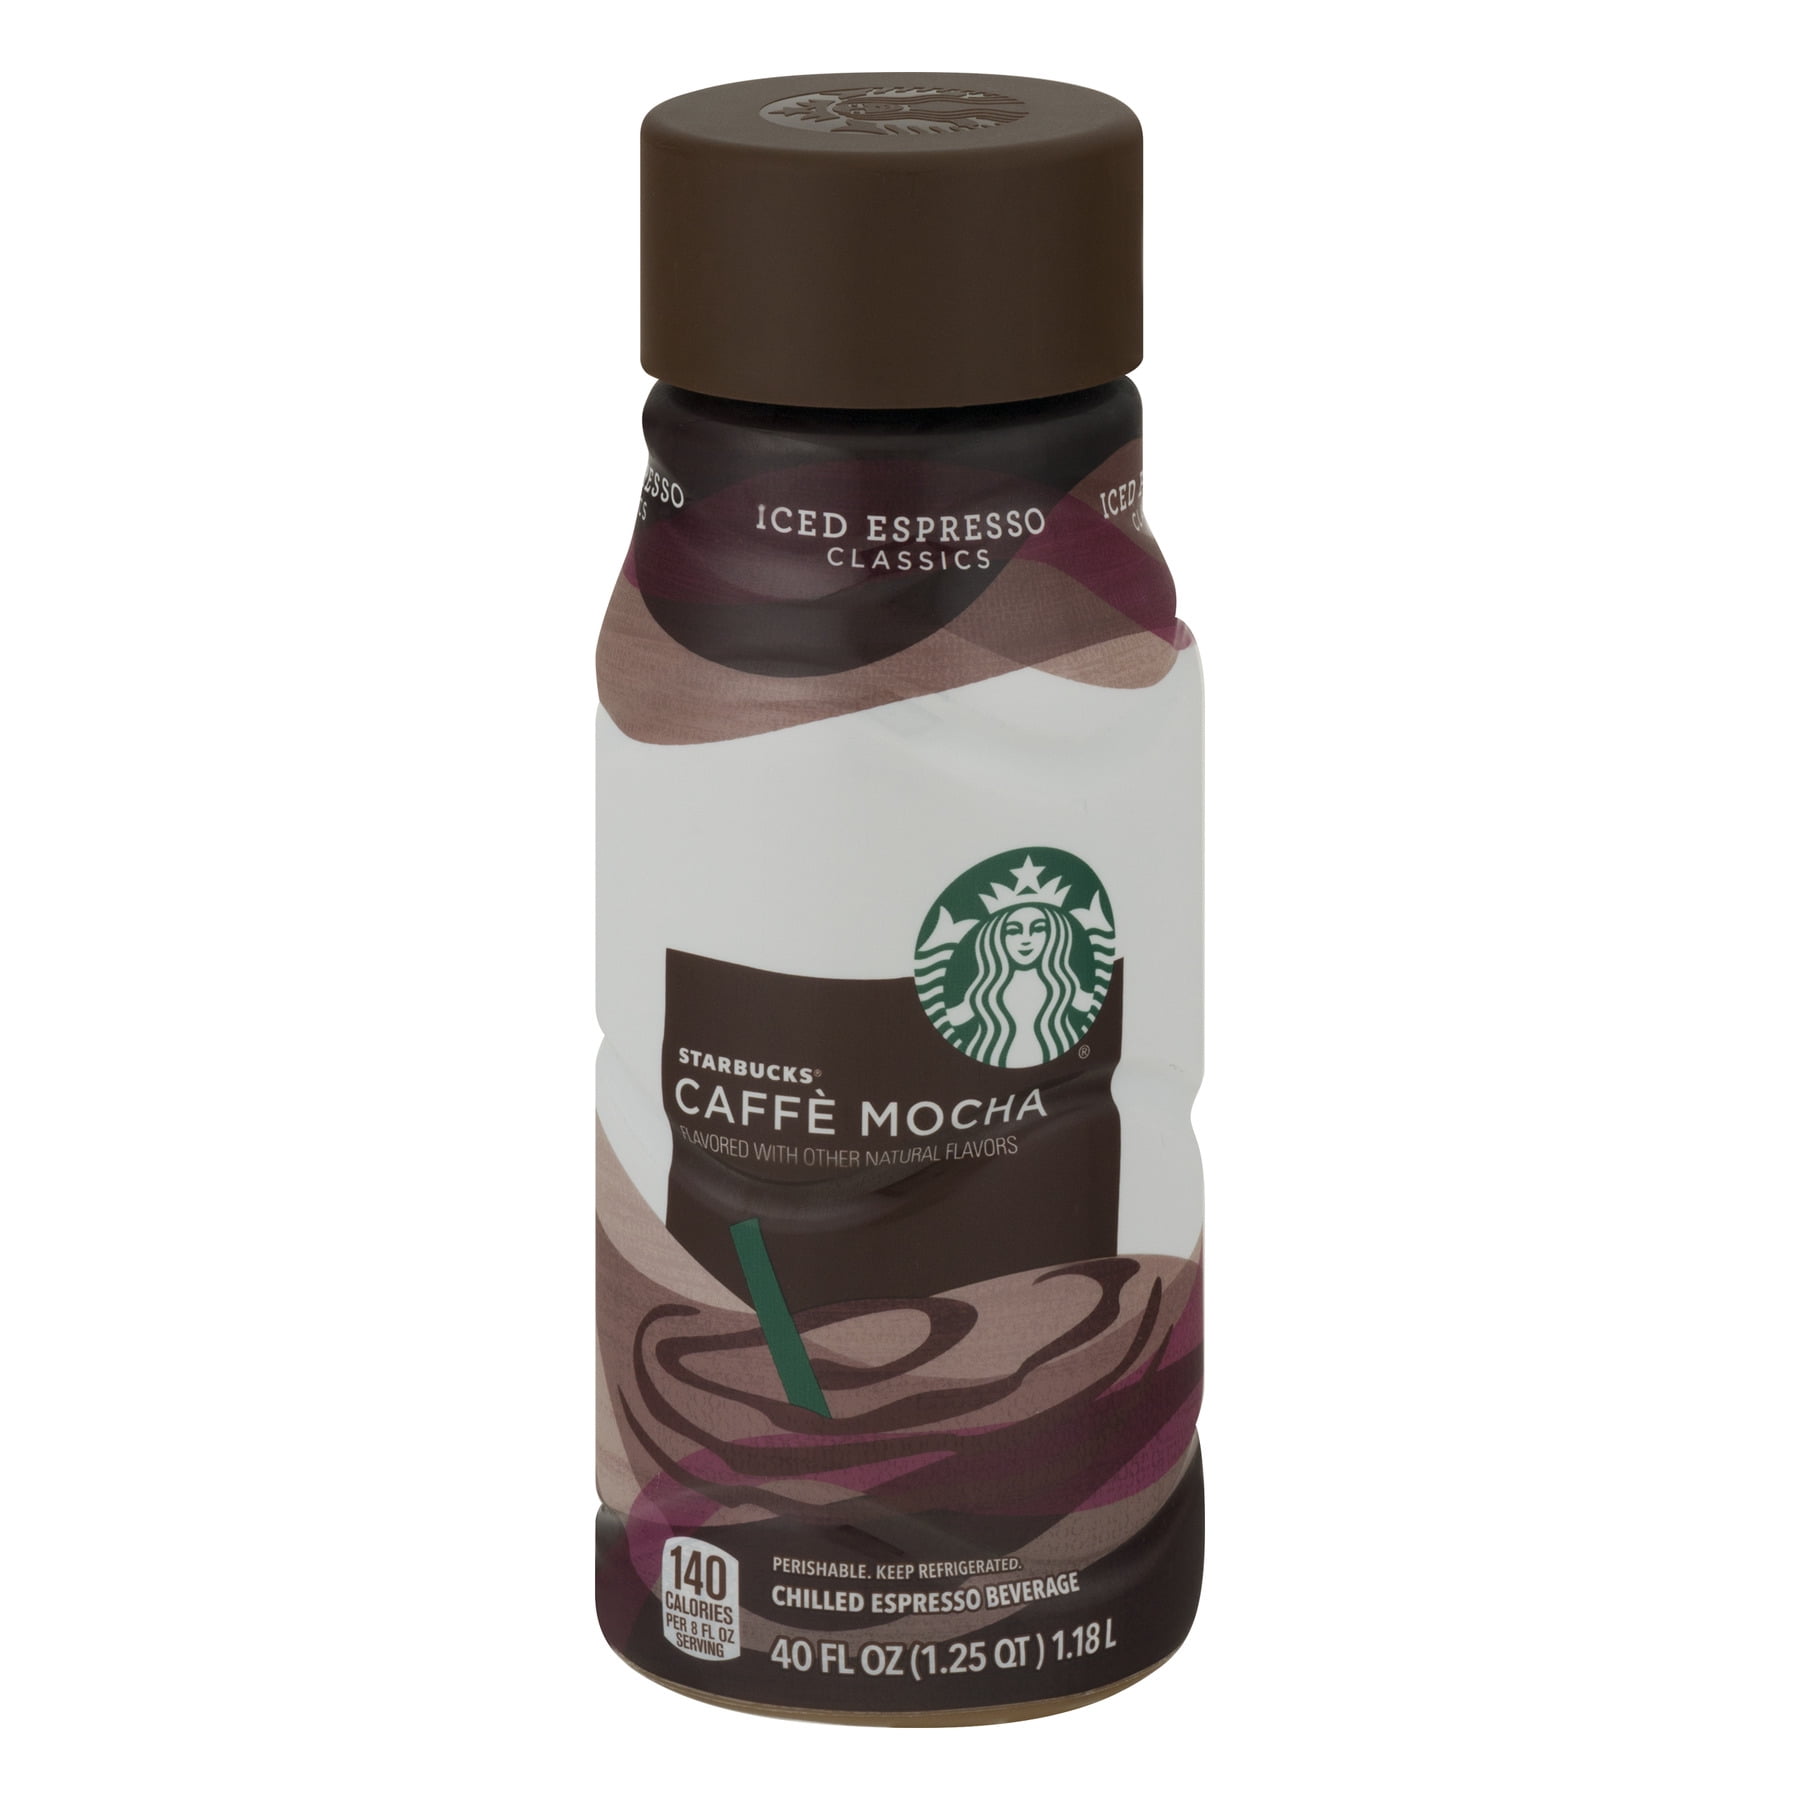 Starbucks Iced Espresso Caffe Mocha Premium Iced Coffee Drink, 40 oz Bottle